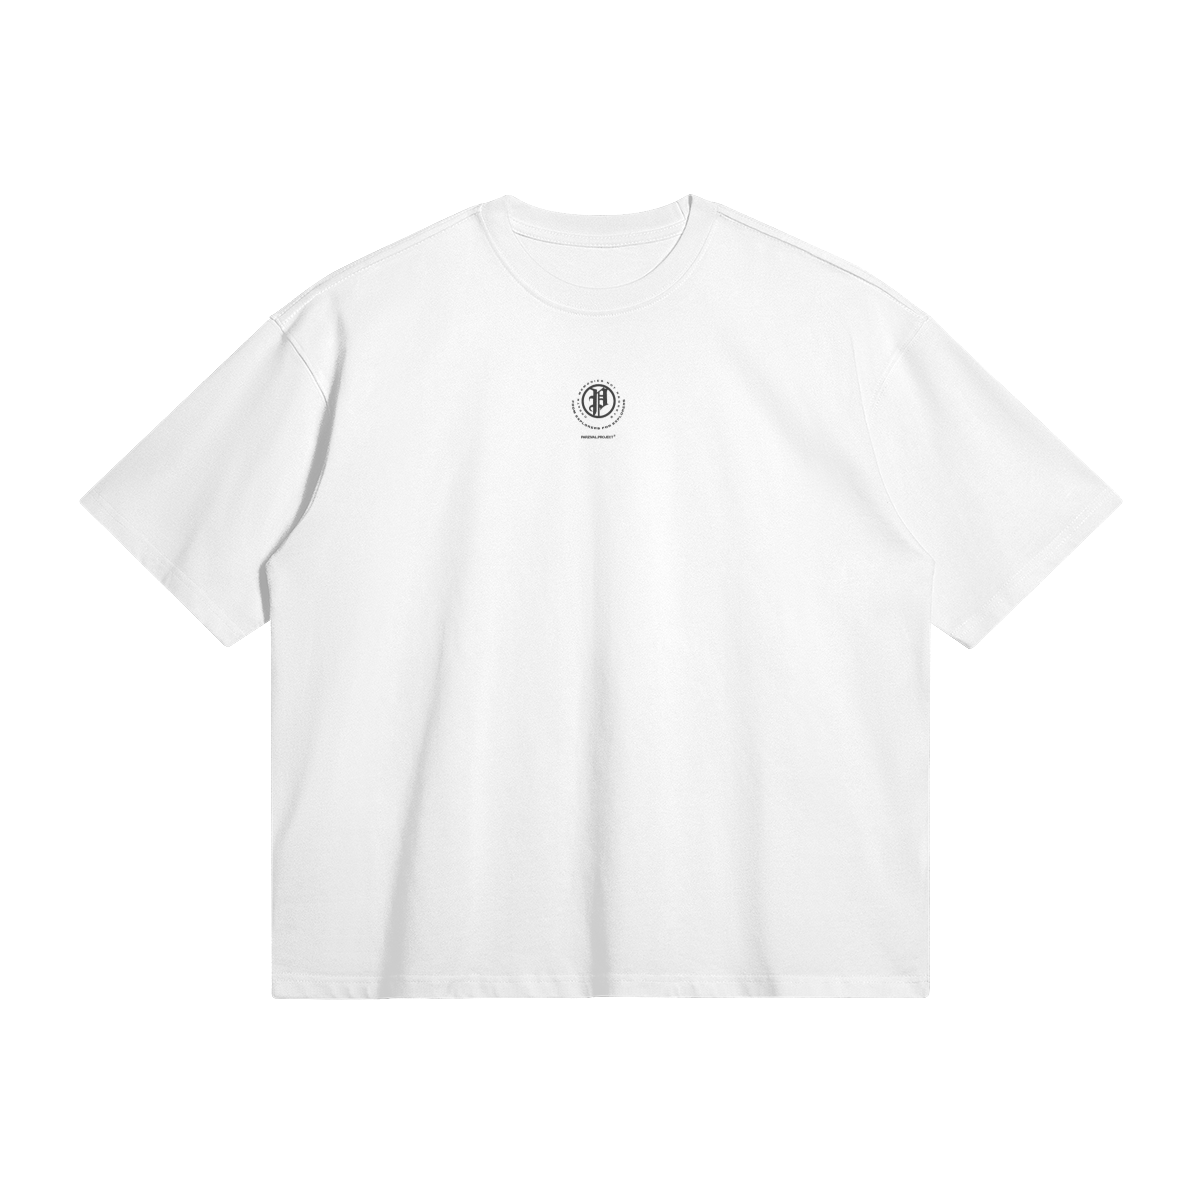 explorer shirt - black logo